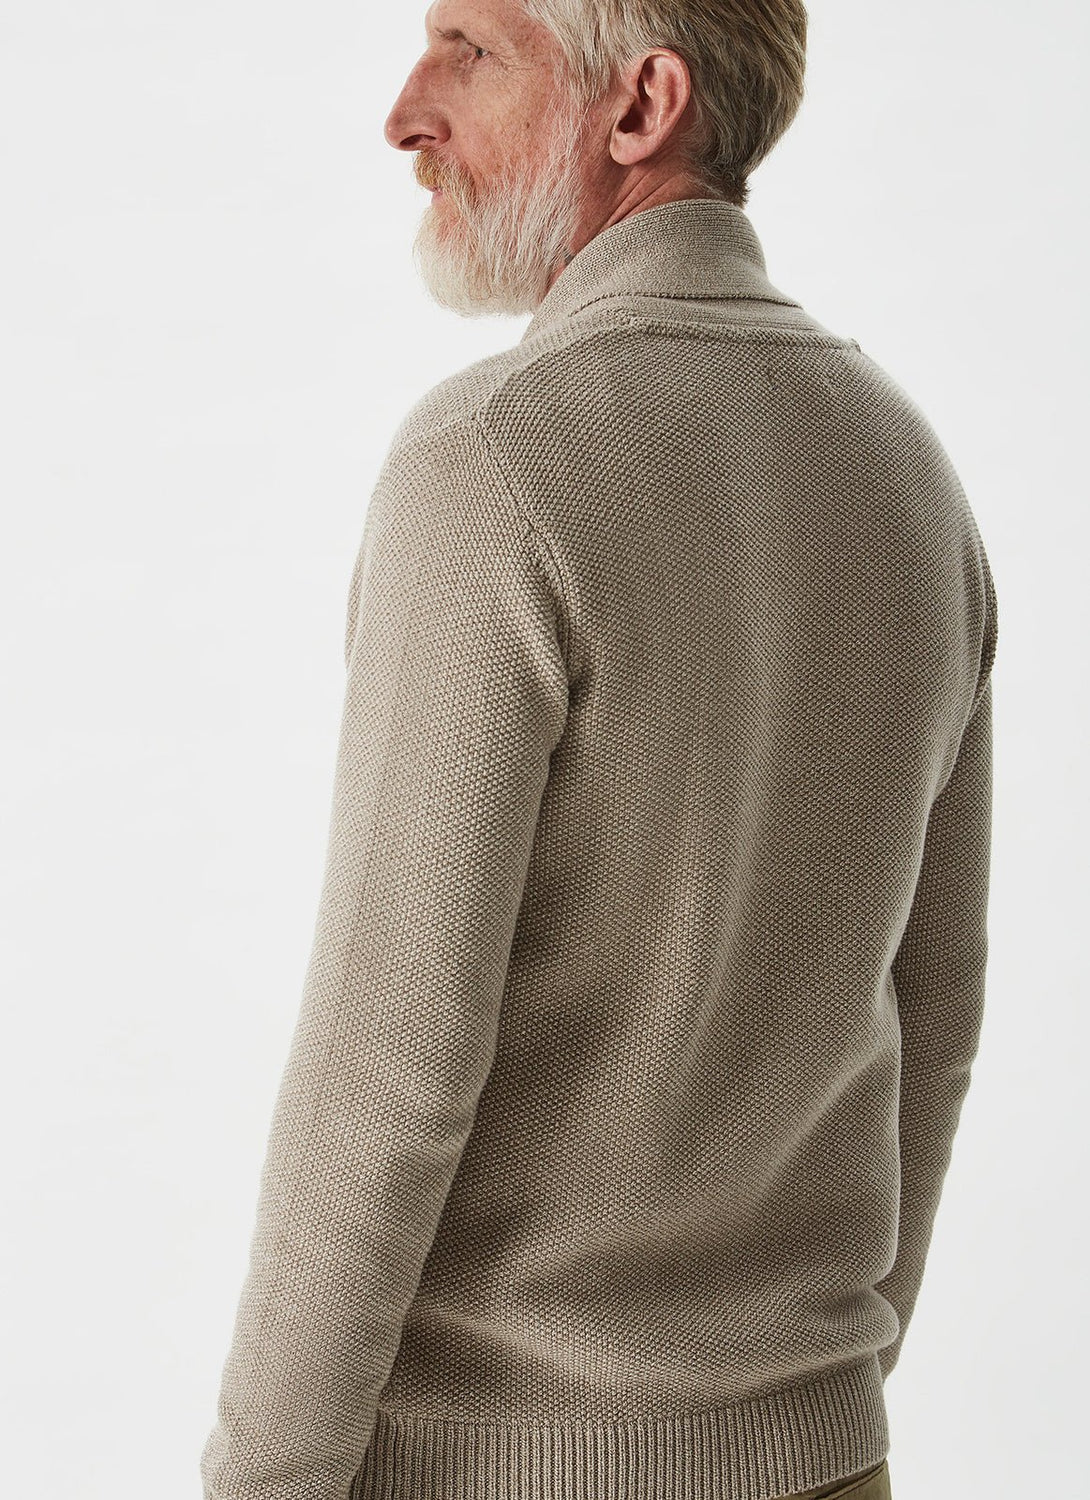 Men Jersey | Sand Smoking Collar Knit Cardigan by Spanish designer Adolfo Dominguez